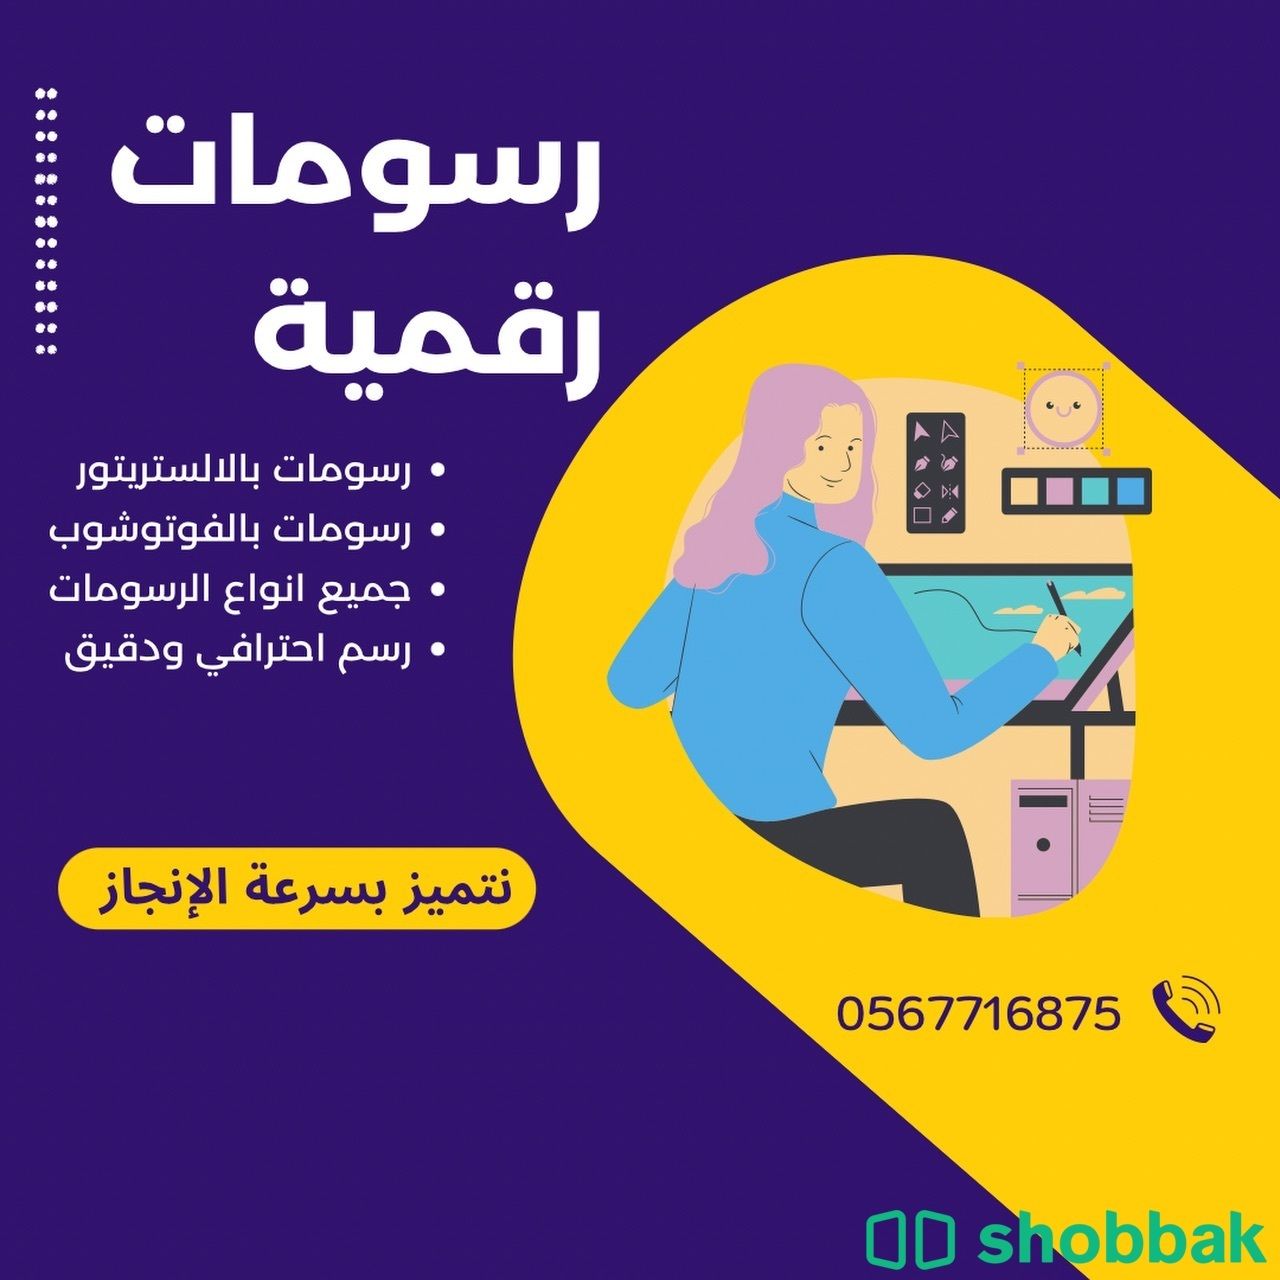 تصاميم جرافيك ورسومات رقمي بإسعار مناسبه وجودة وسرعة انجاز Shobbak Saudi Arabia